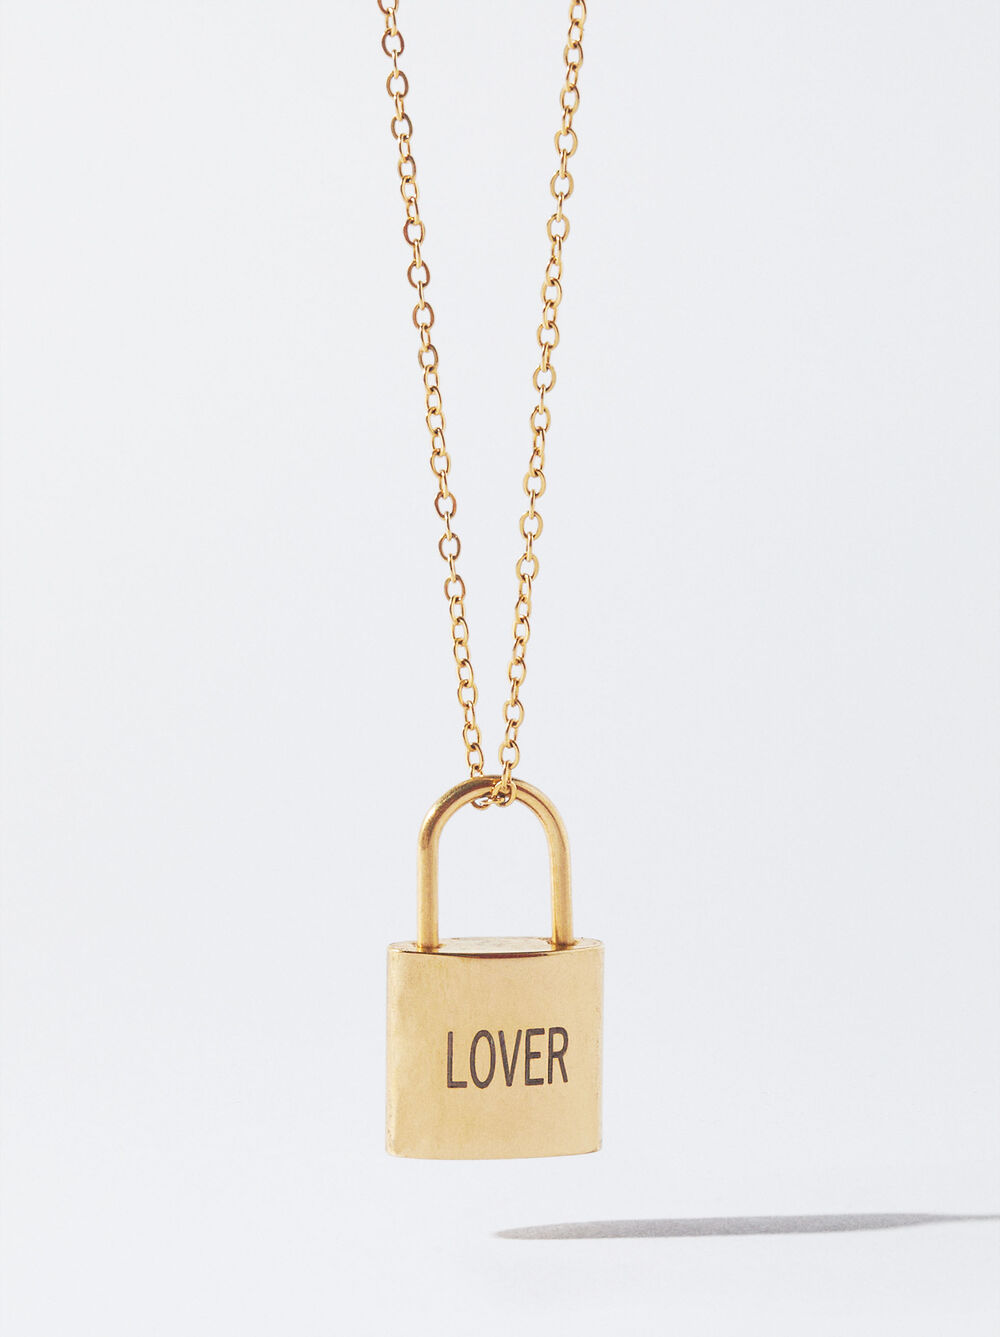 Online Exclusive - Personalized Golden Steel Lock Necklace